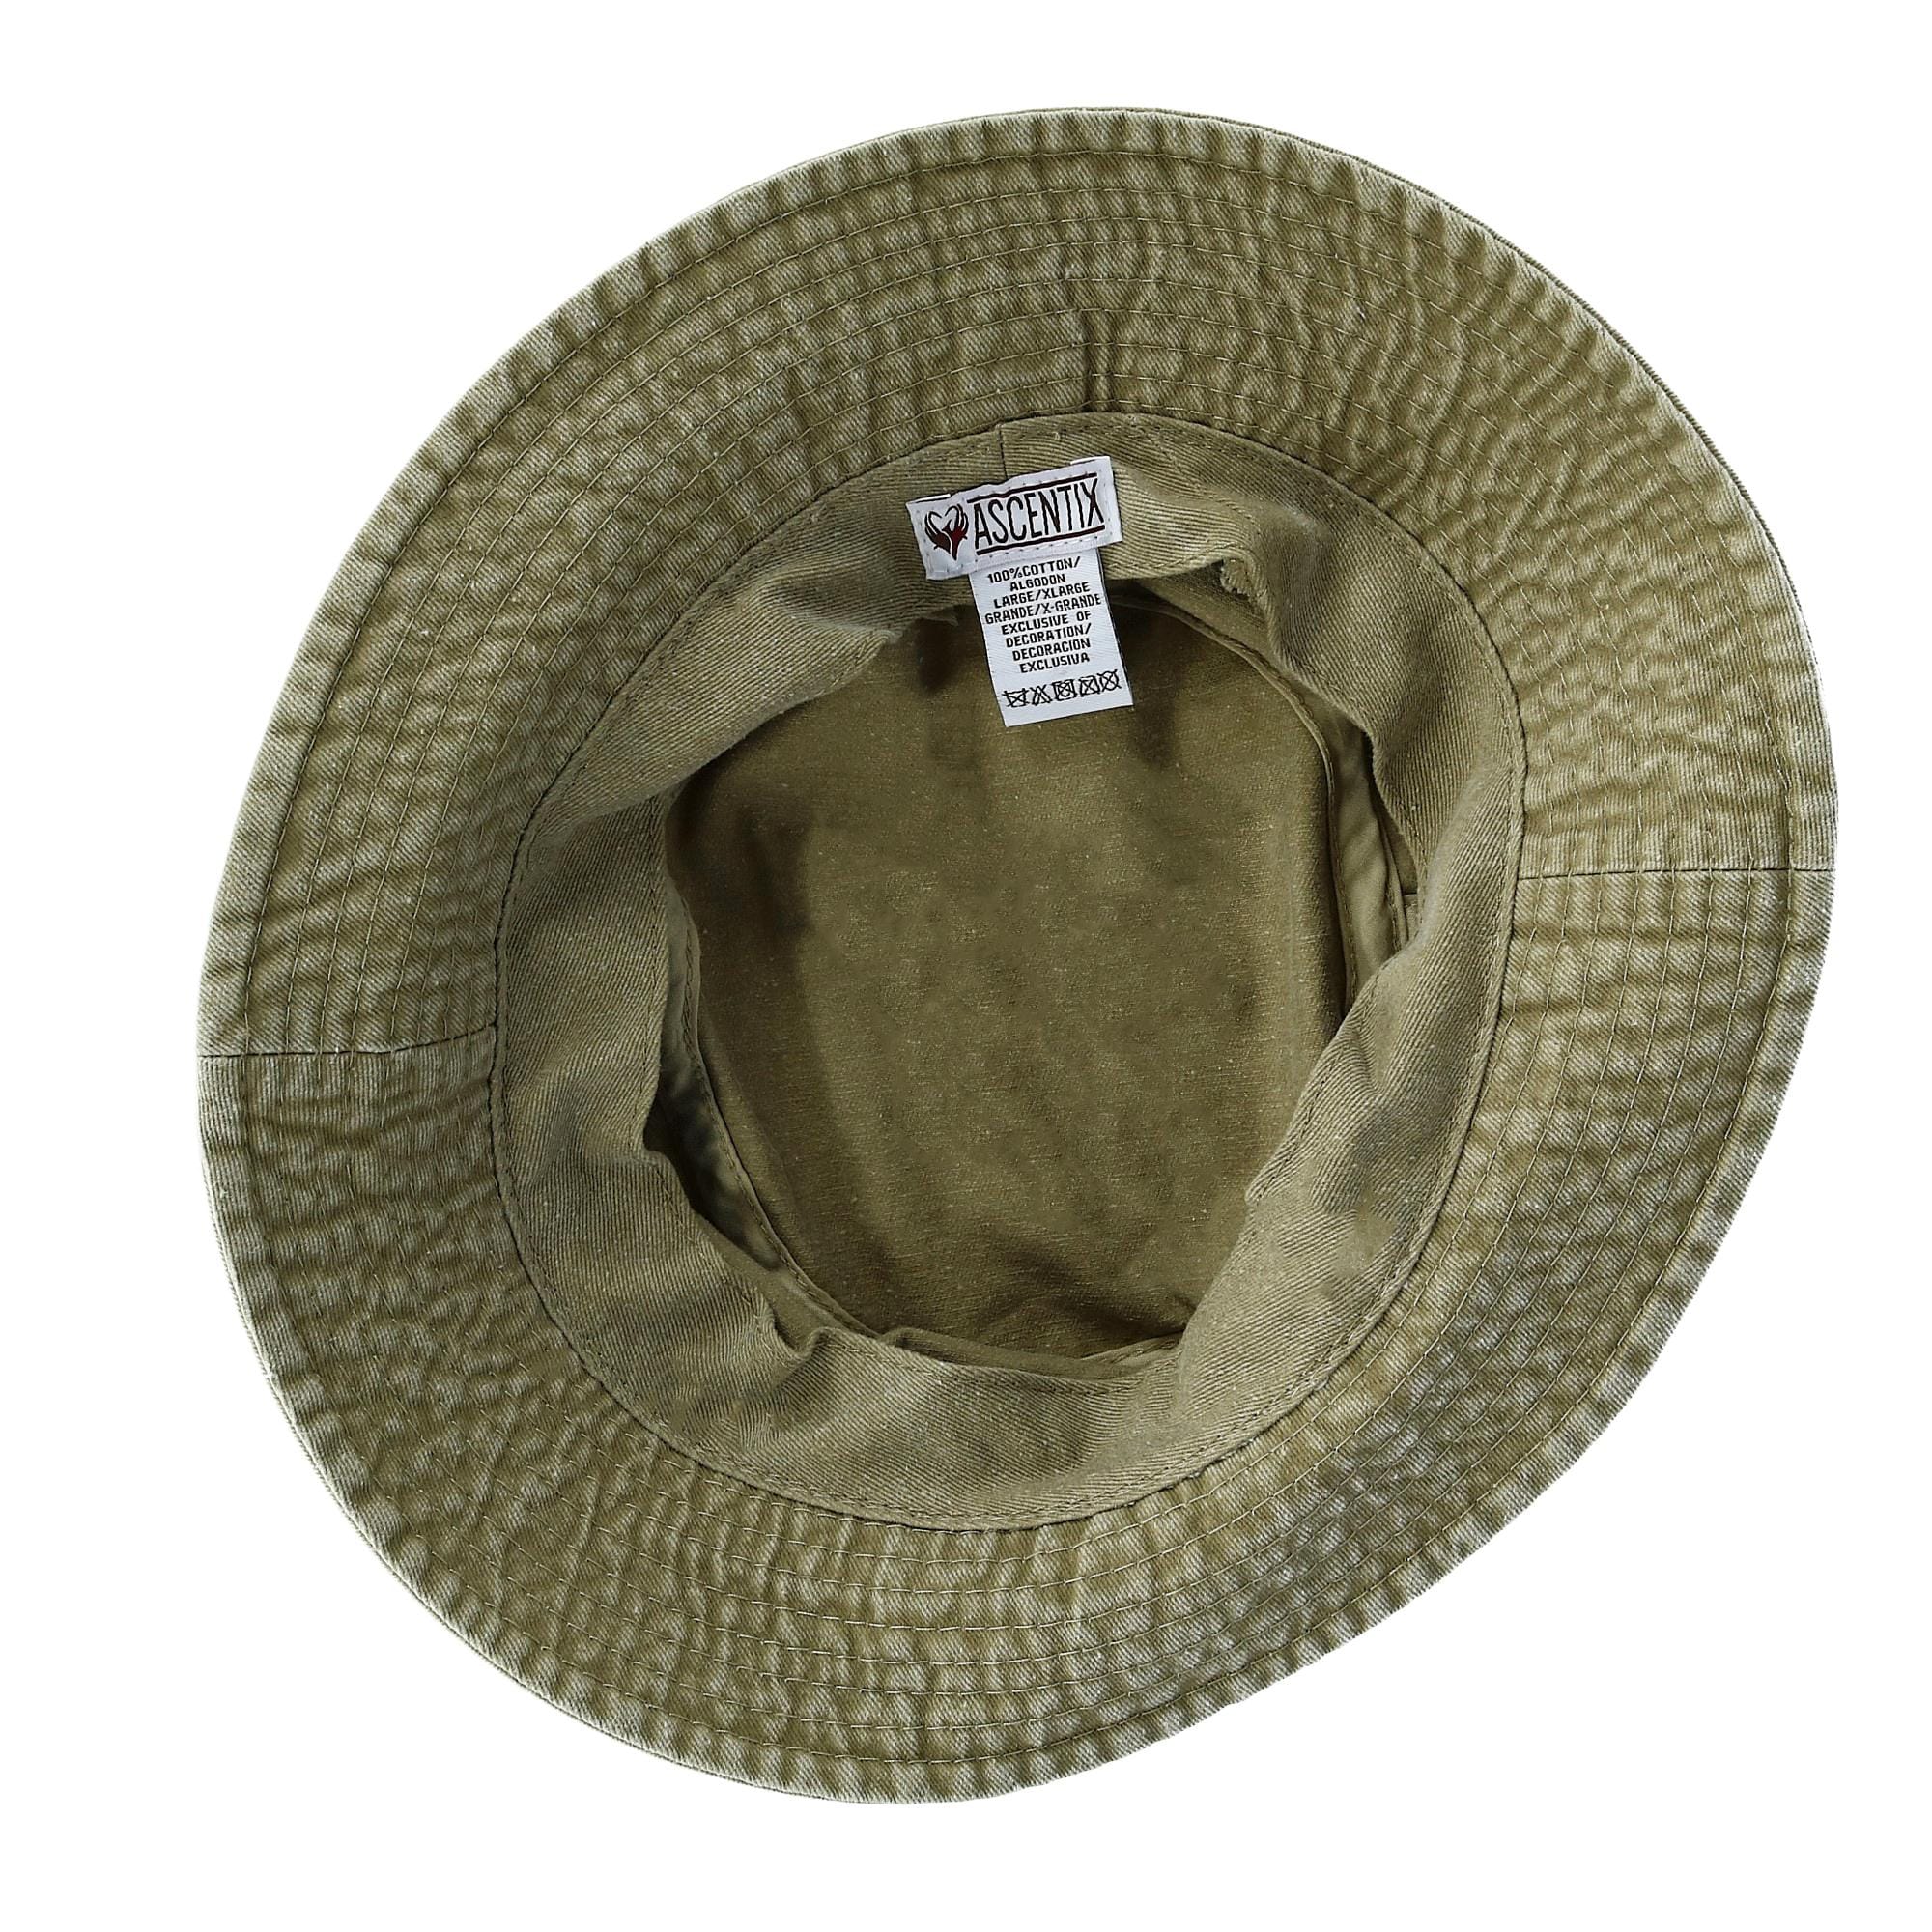 Cotton Packable Bucket Hat by Ascentix